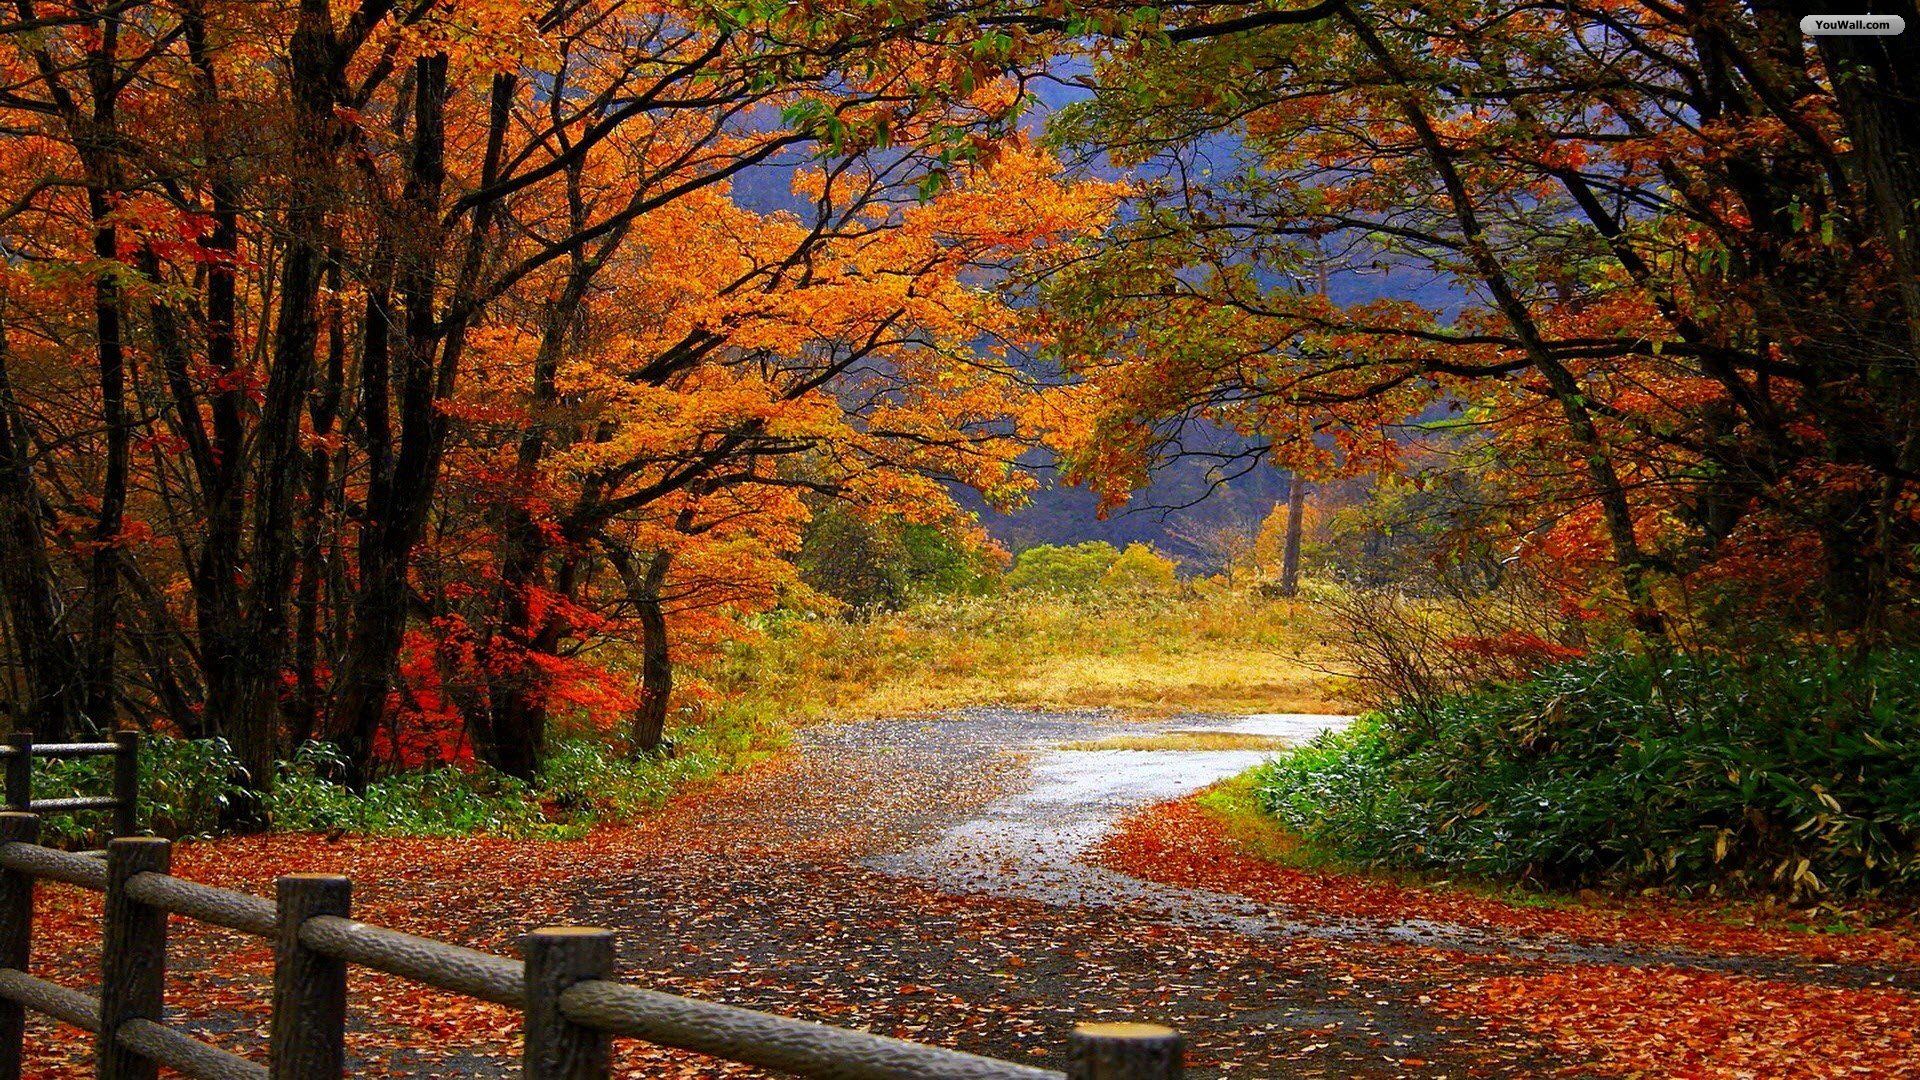 YouWall - Autumn Scenery Wallpaper - wallpaper,wallpapers,free